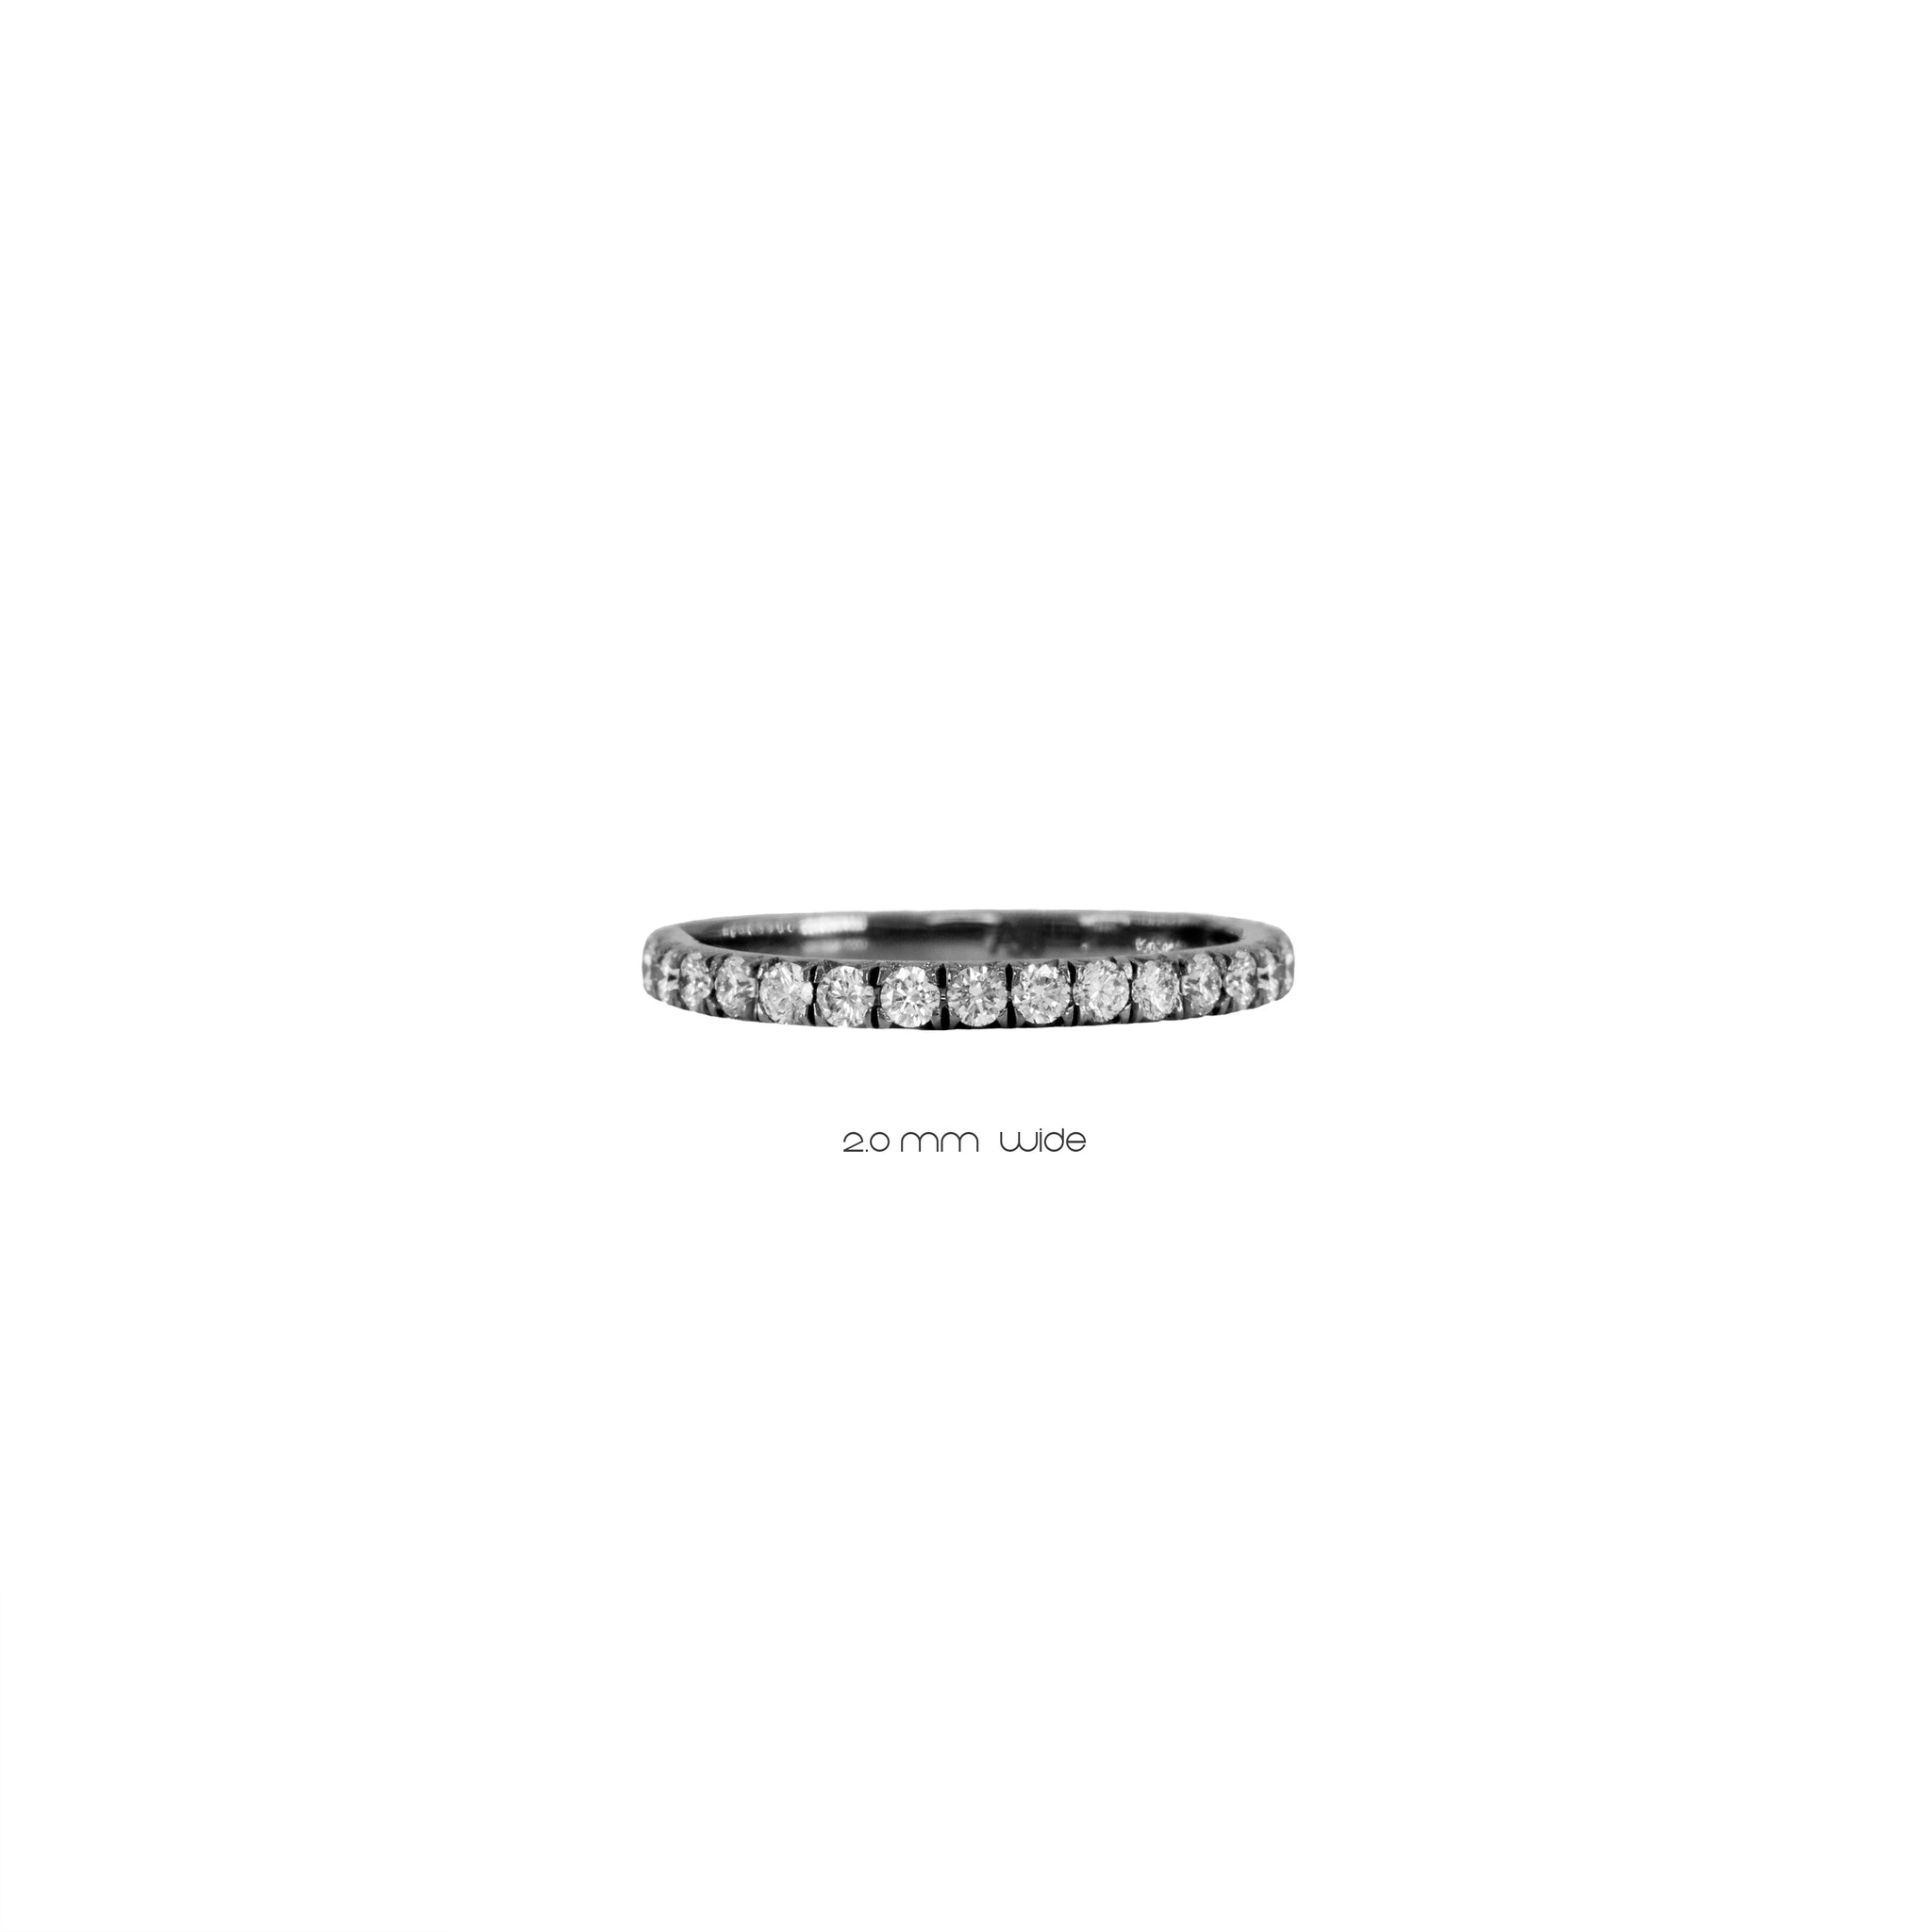 the ètoile noir eternity ring